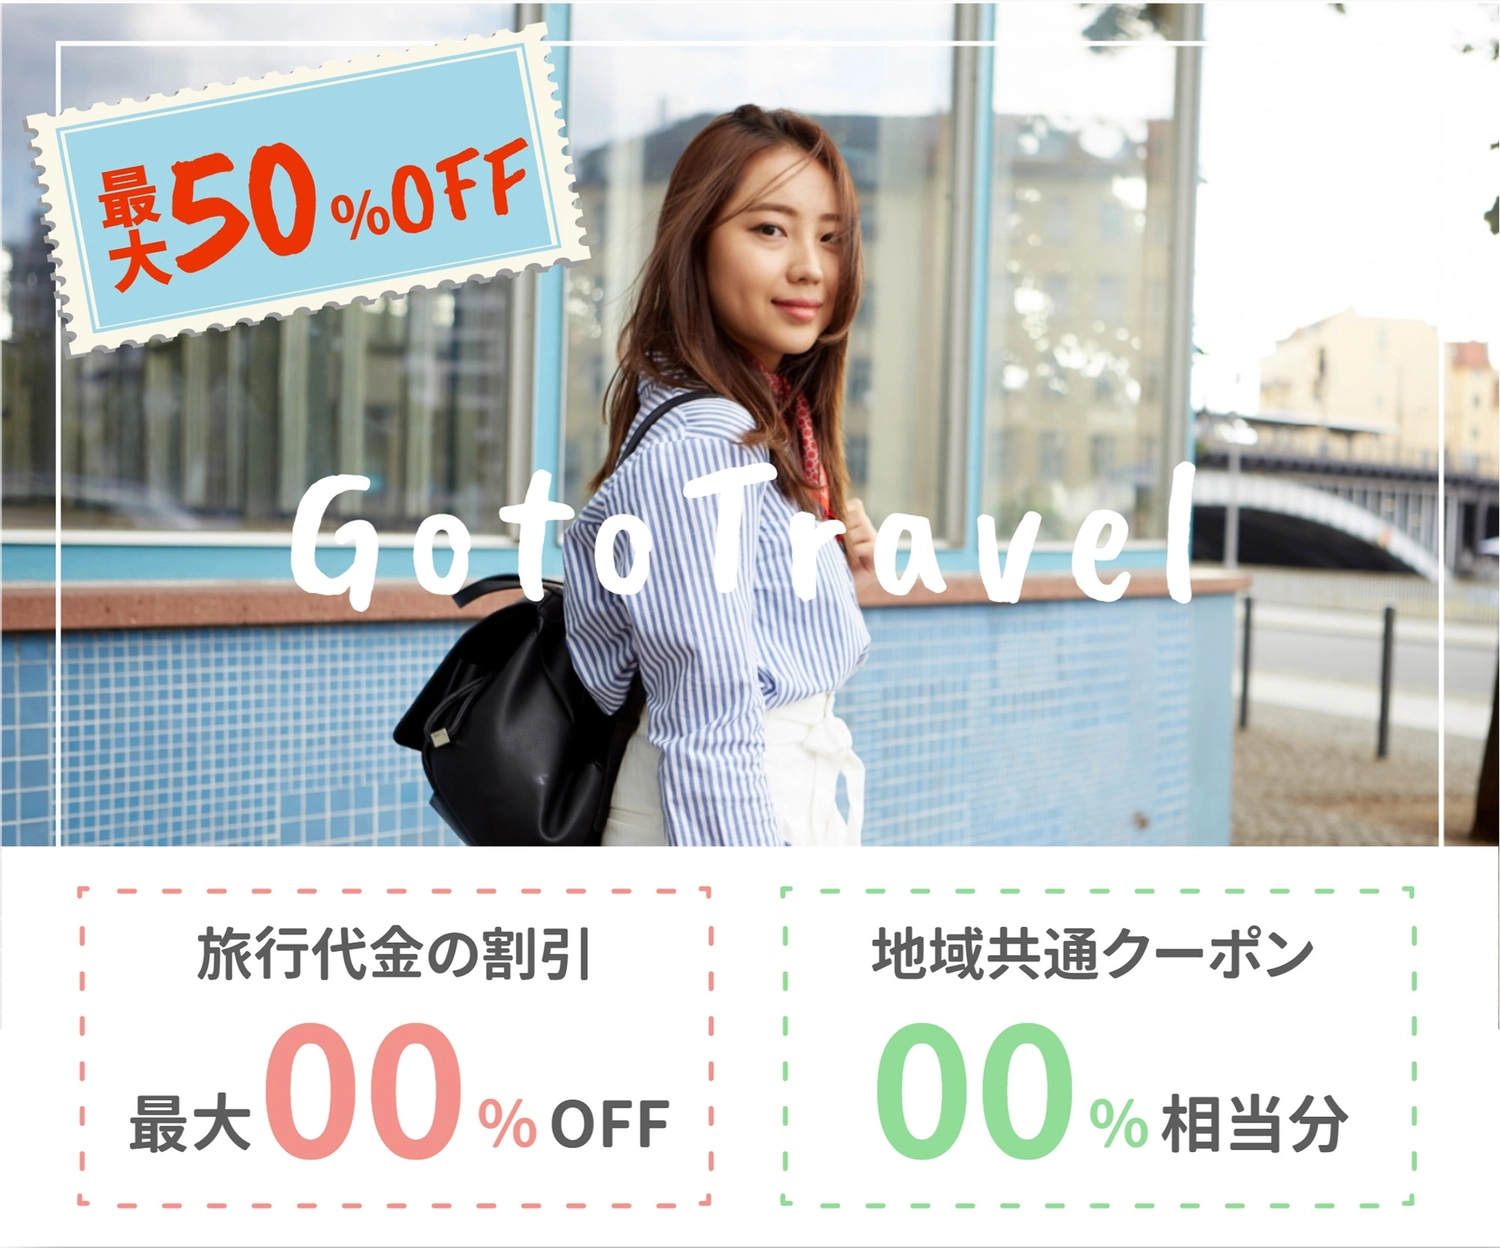 Gotoトラベルの広告バナー（写真）, Số tiền, miễn giảm, thiết kế, banner mẫu